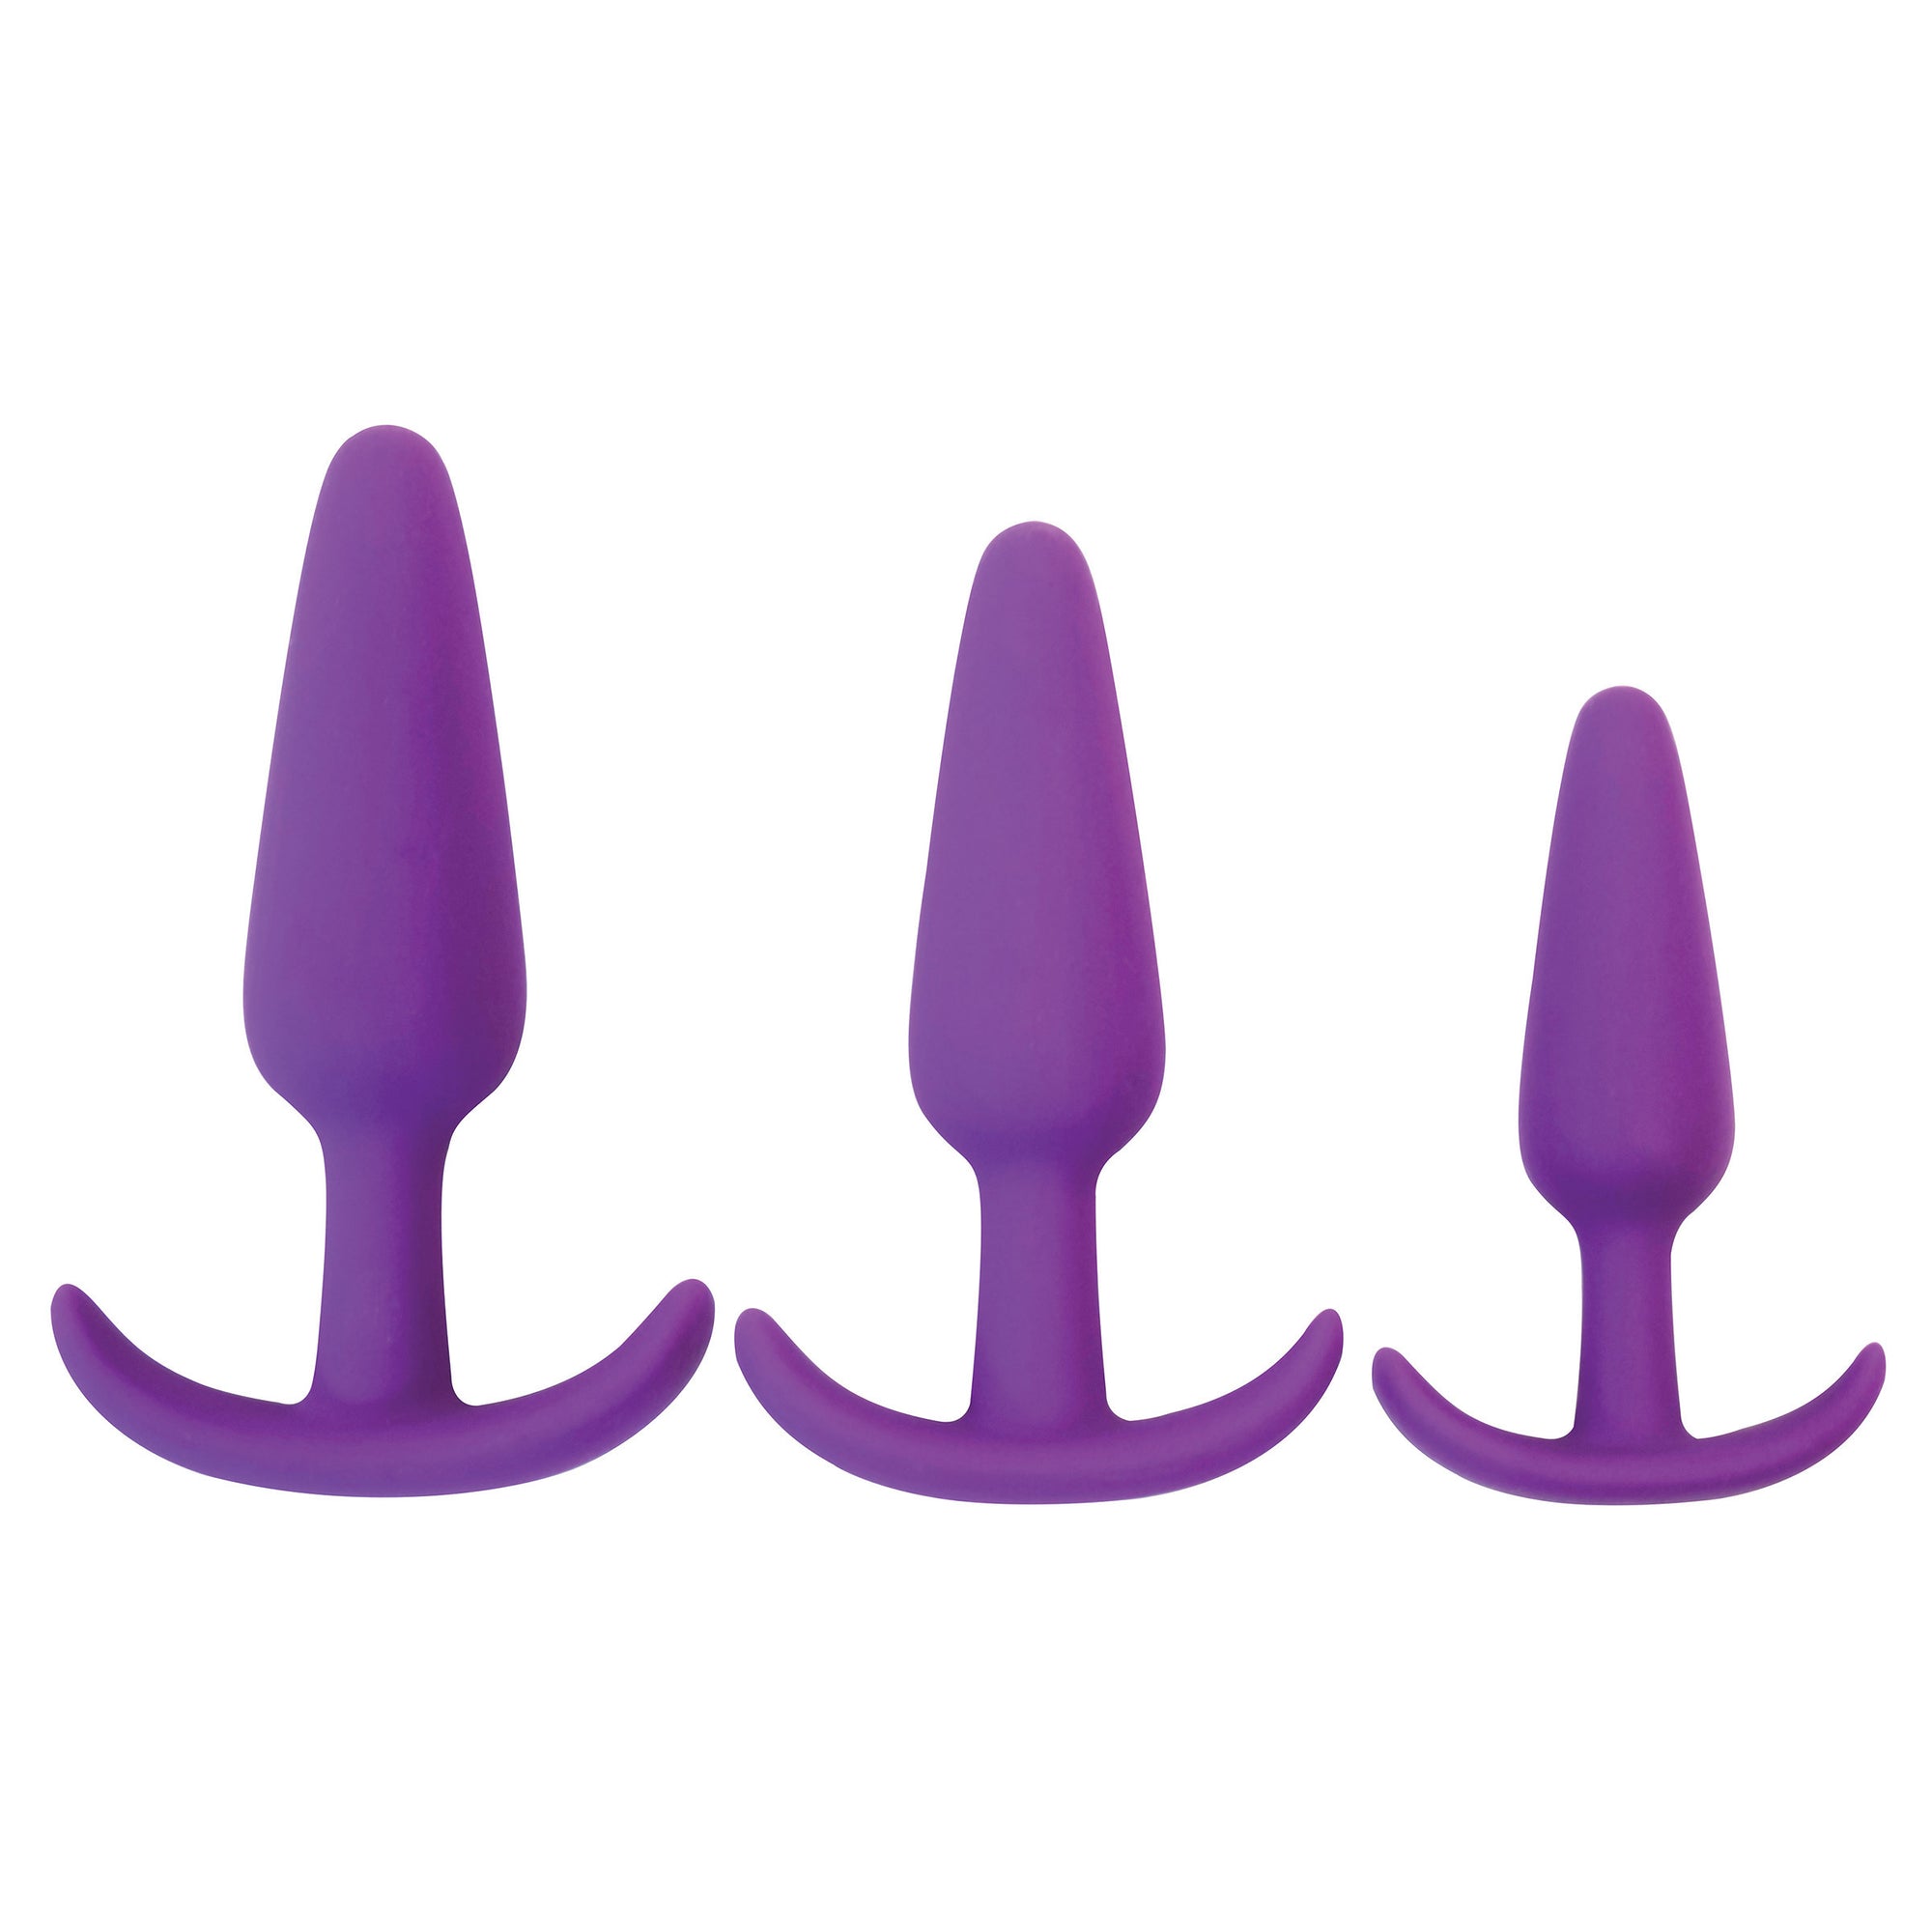 Rump Rockers 3 Piece Silicone Anal Plug Set - Purple 
Anal Toys
Gossip Cupid’s Secret Stash